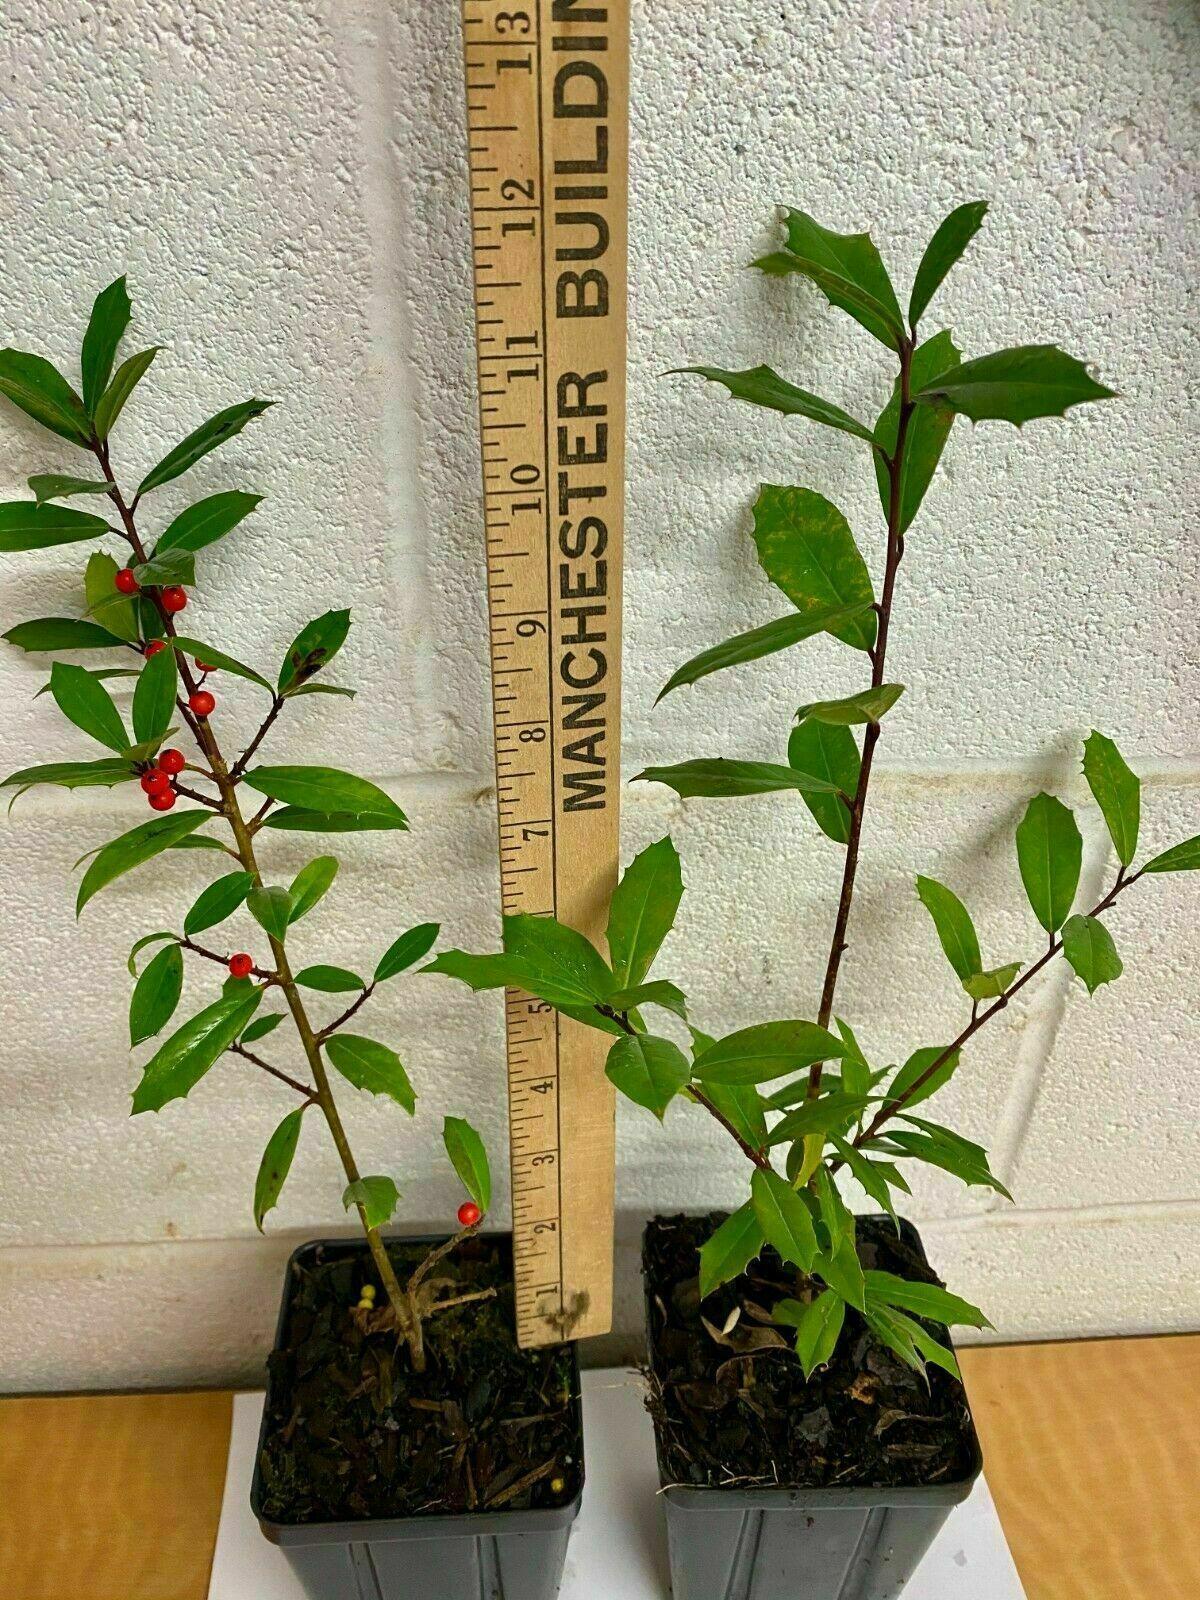 2 Foster Holly Tree/Shrubs - Live Plants - 6-12" Tall Seedlings - Quart Pots - The Nursery Center